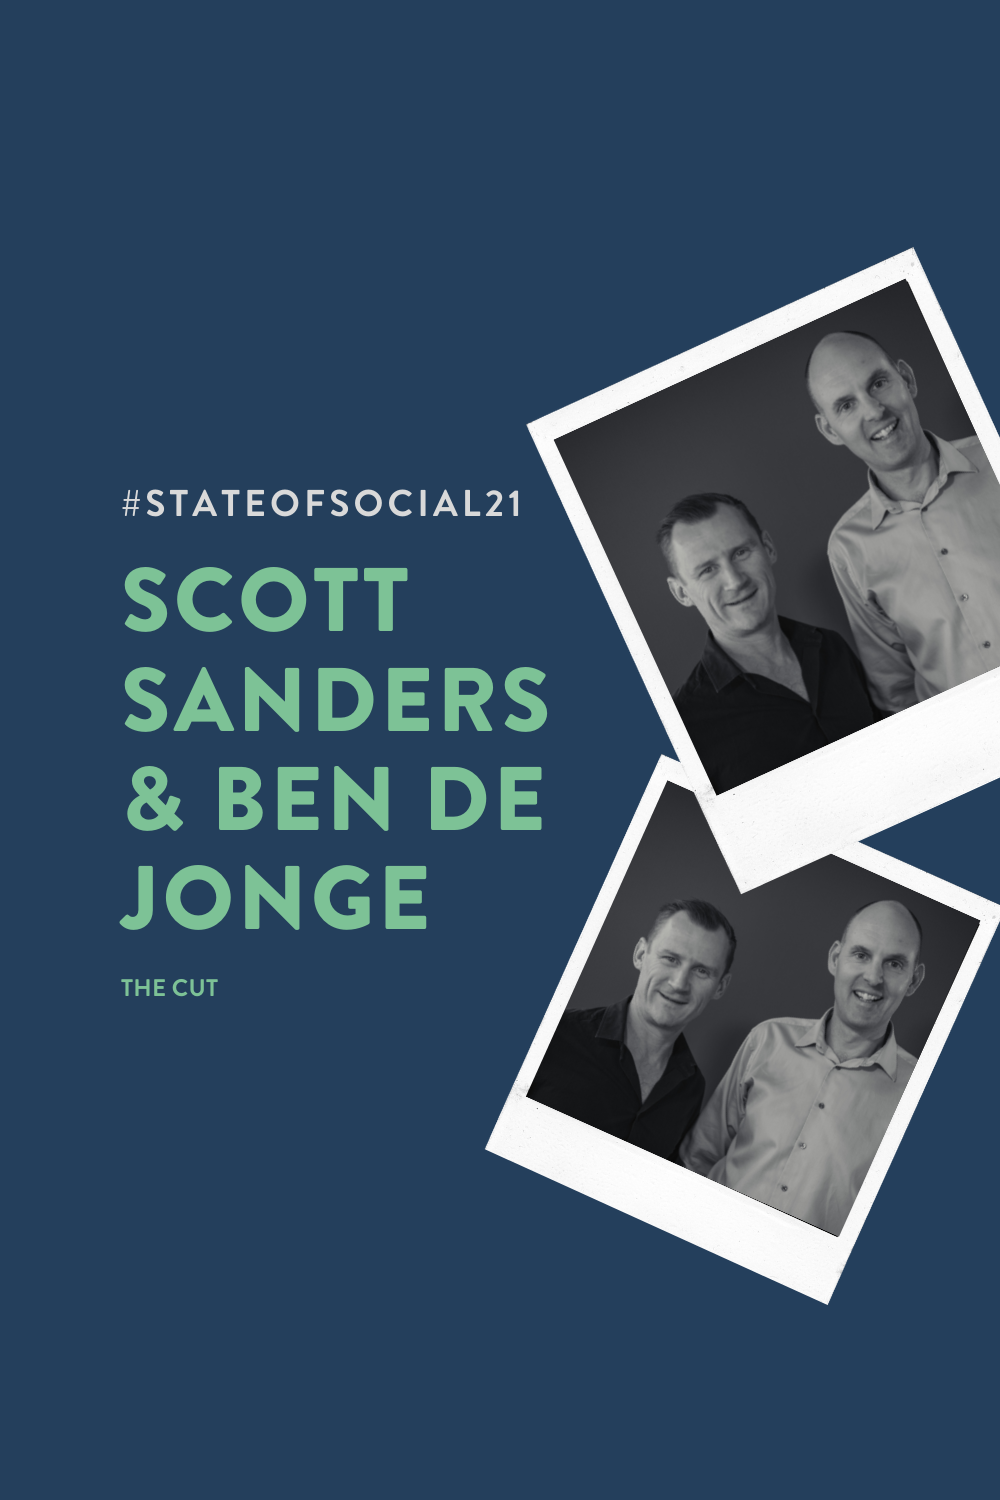 Cut through the eCommerce chaos with Ben de Jonge and Scott Sanders at SOS21